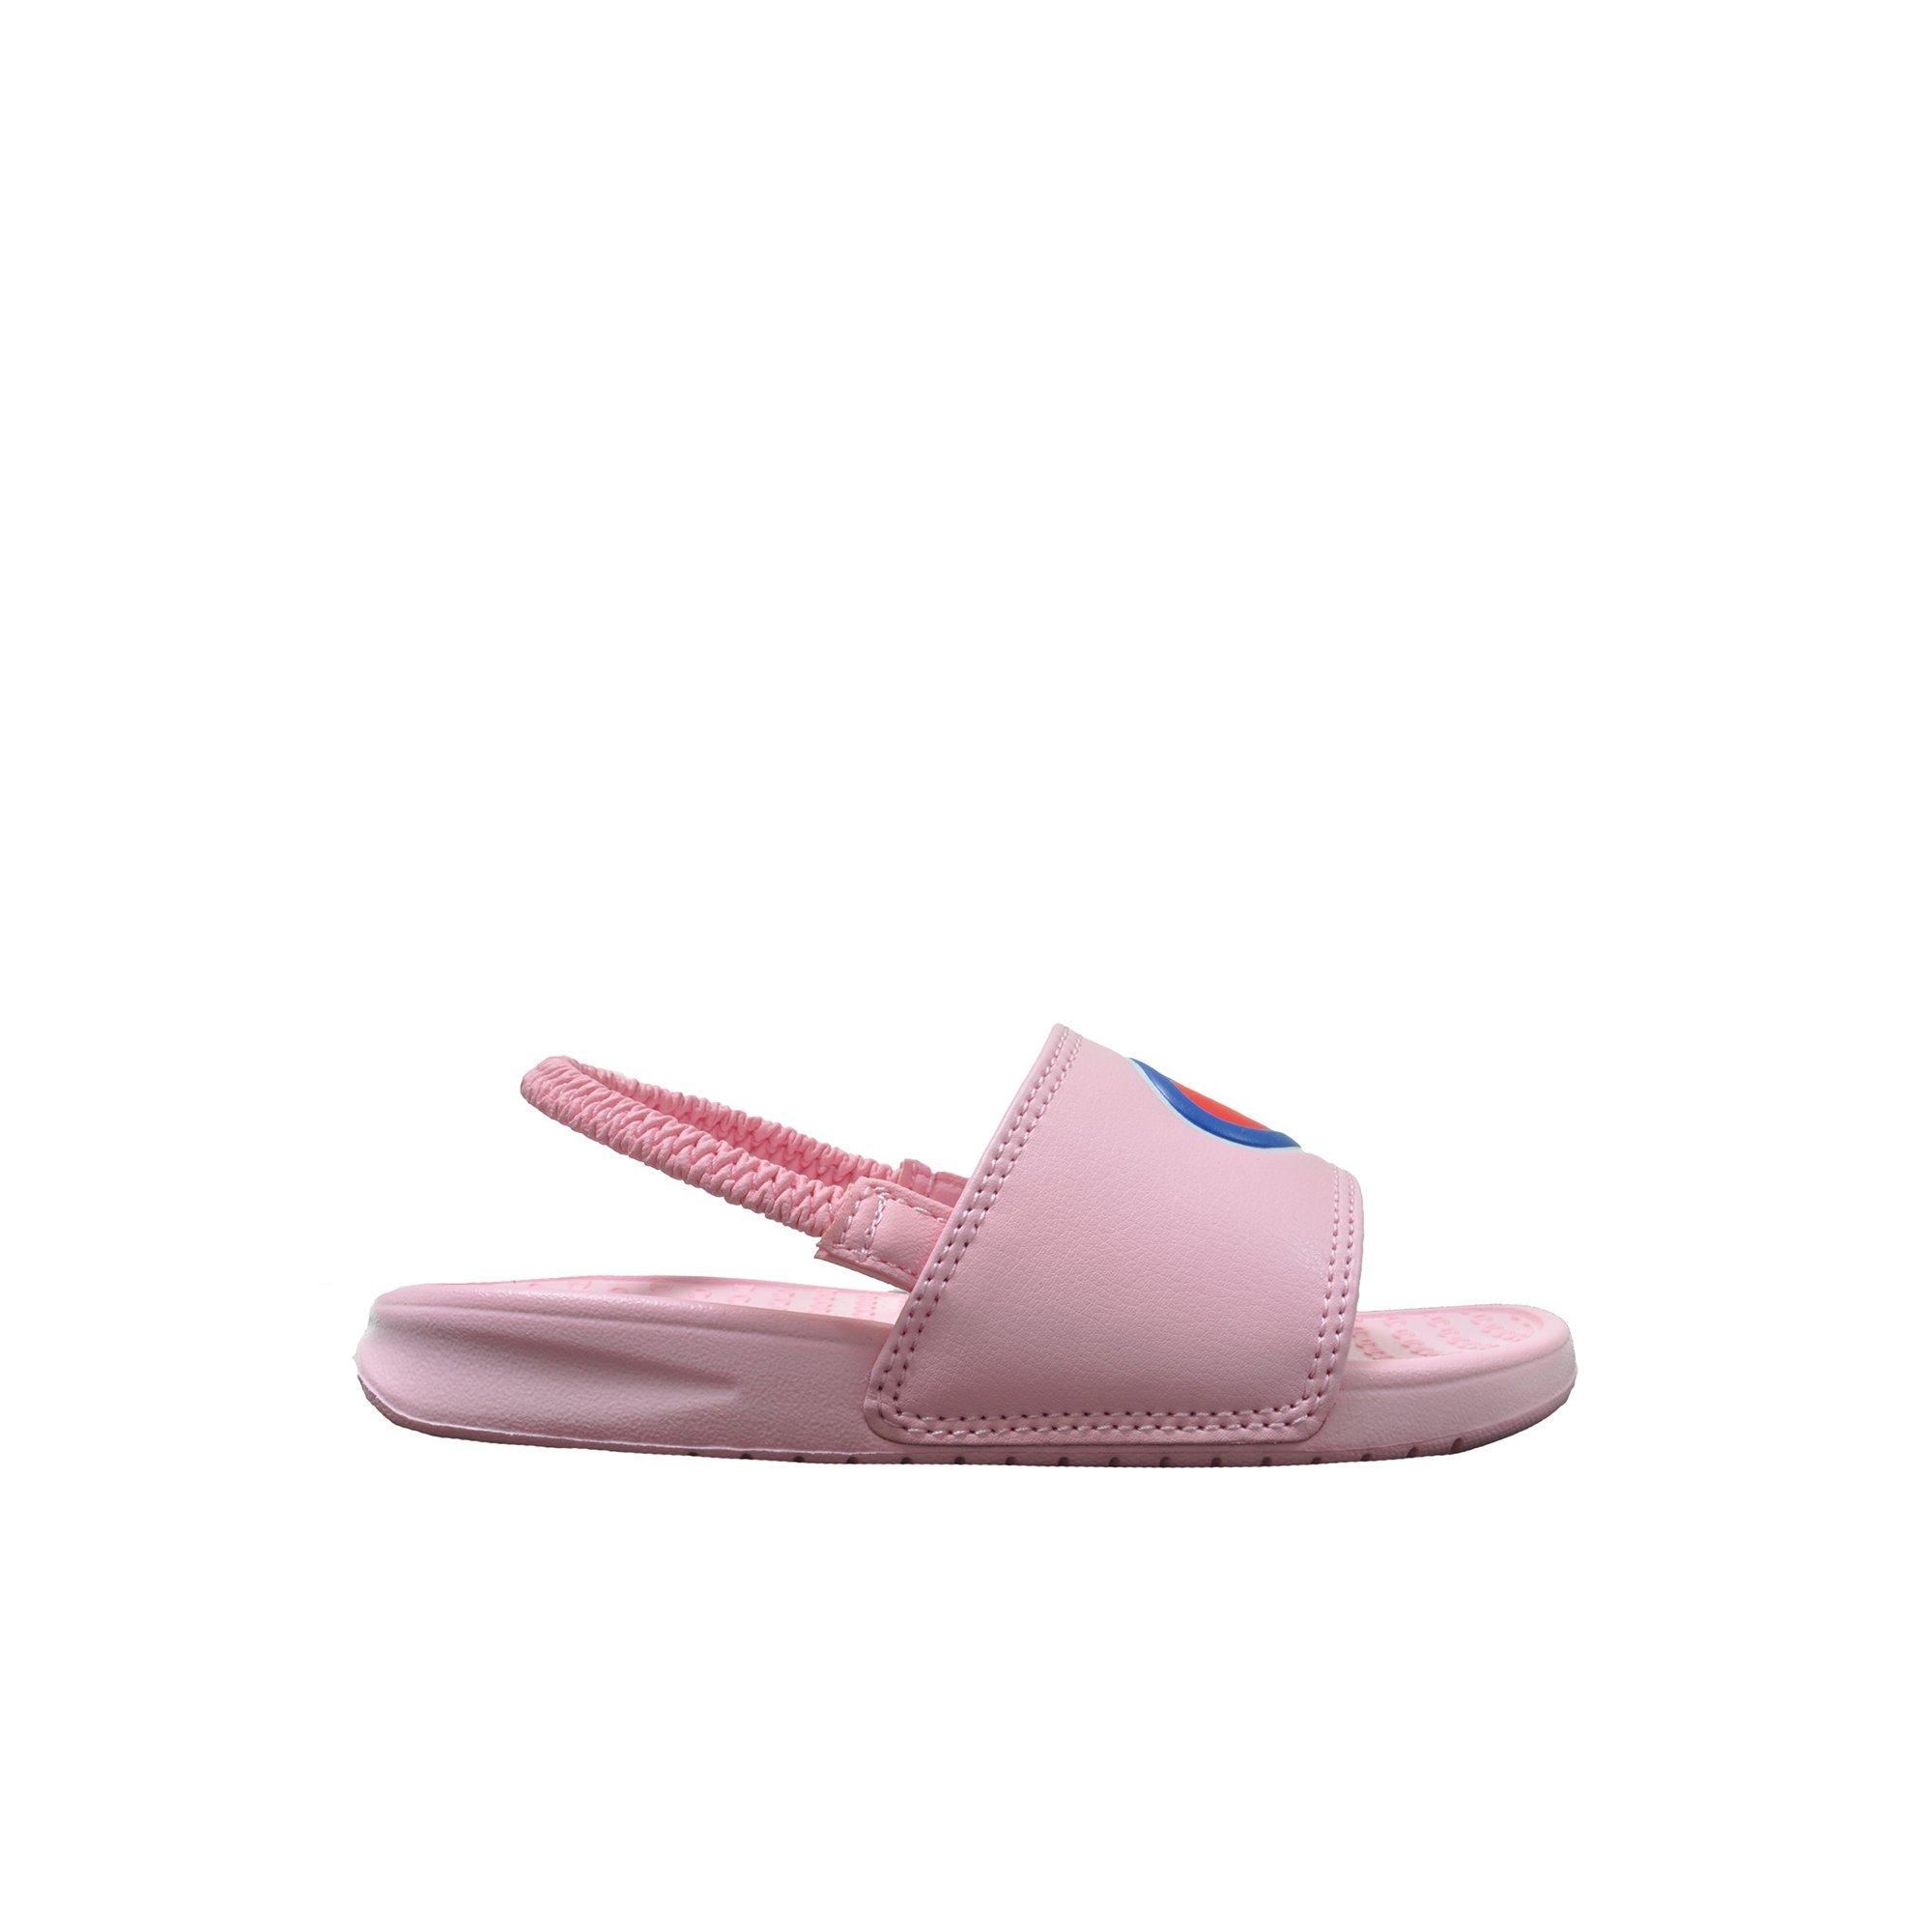 Sandals and Slides-Infant and Toddler 